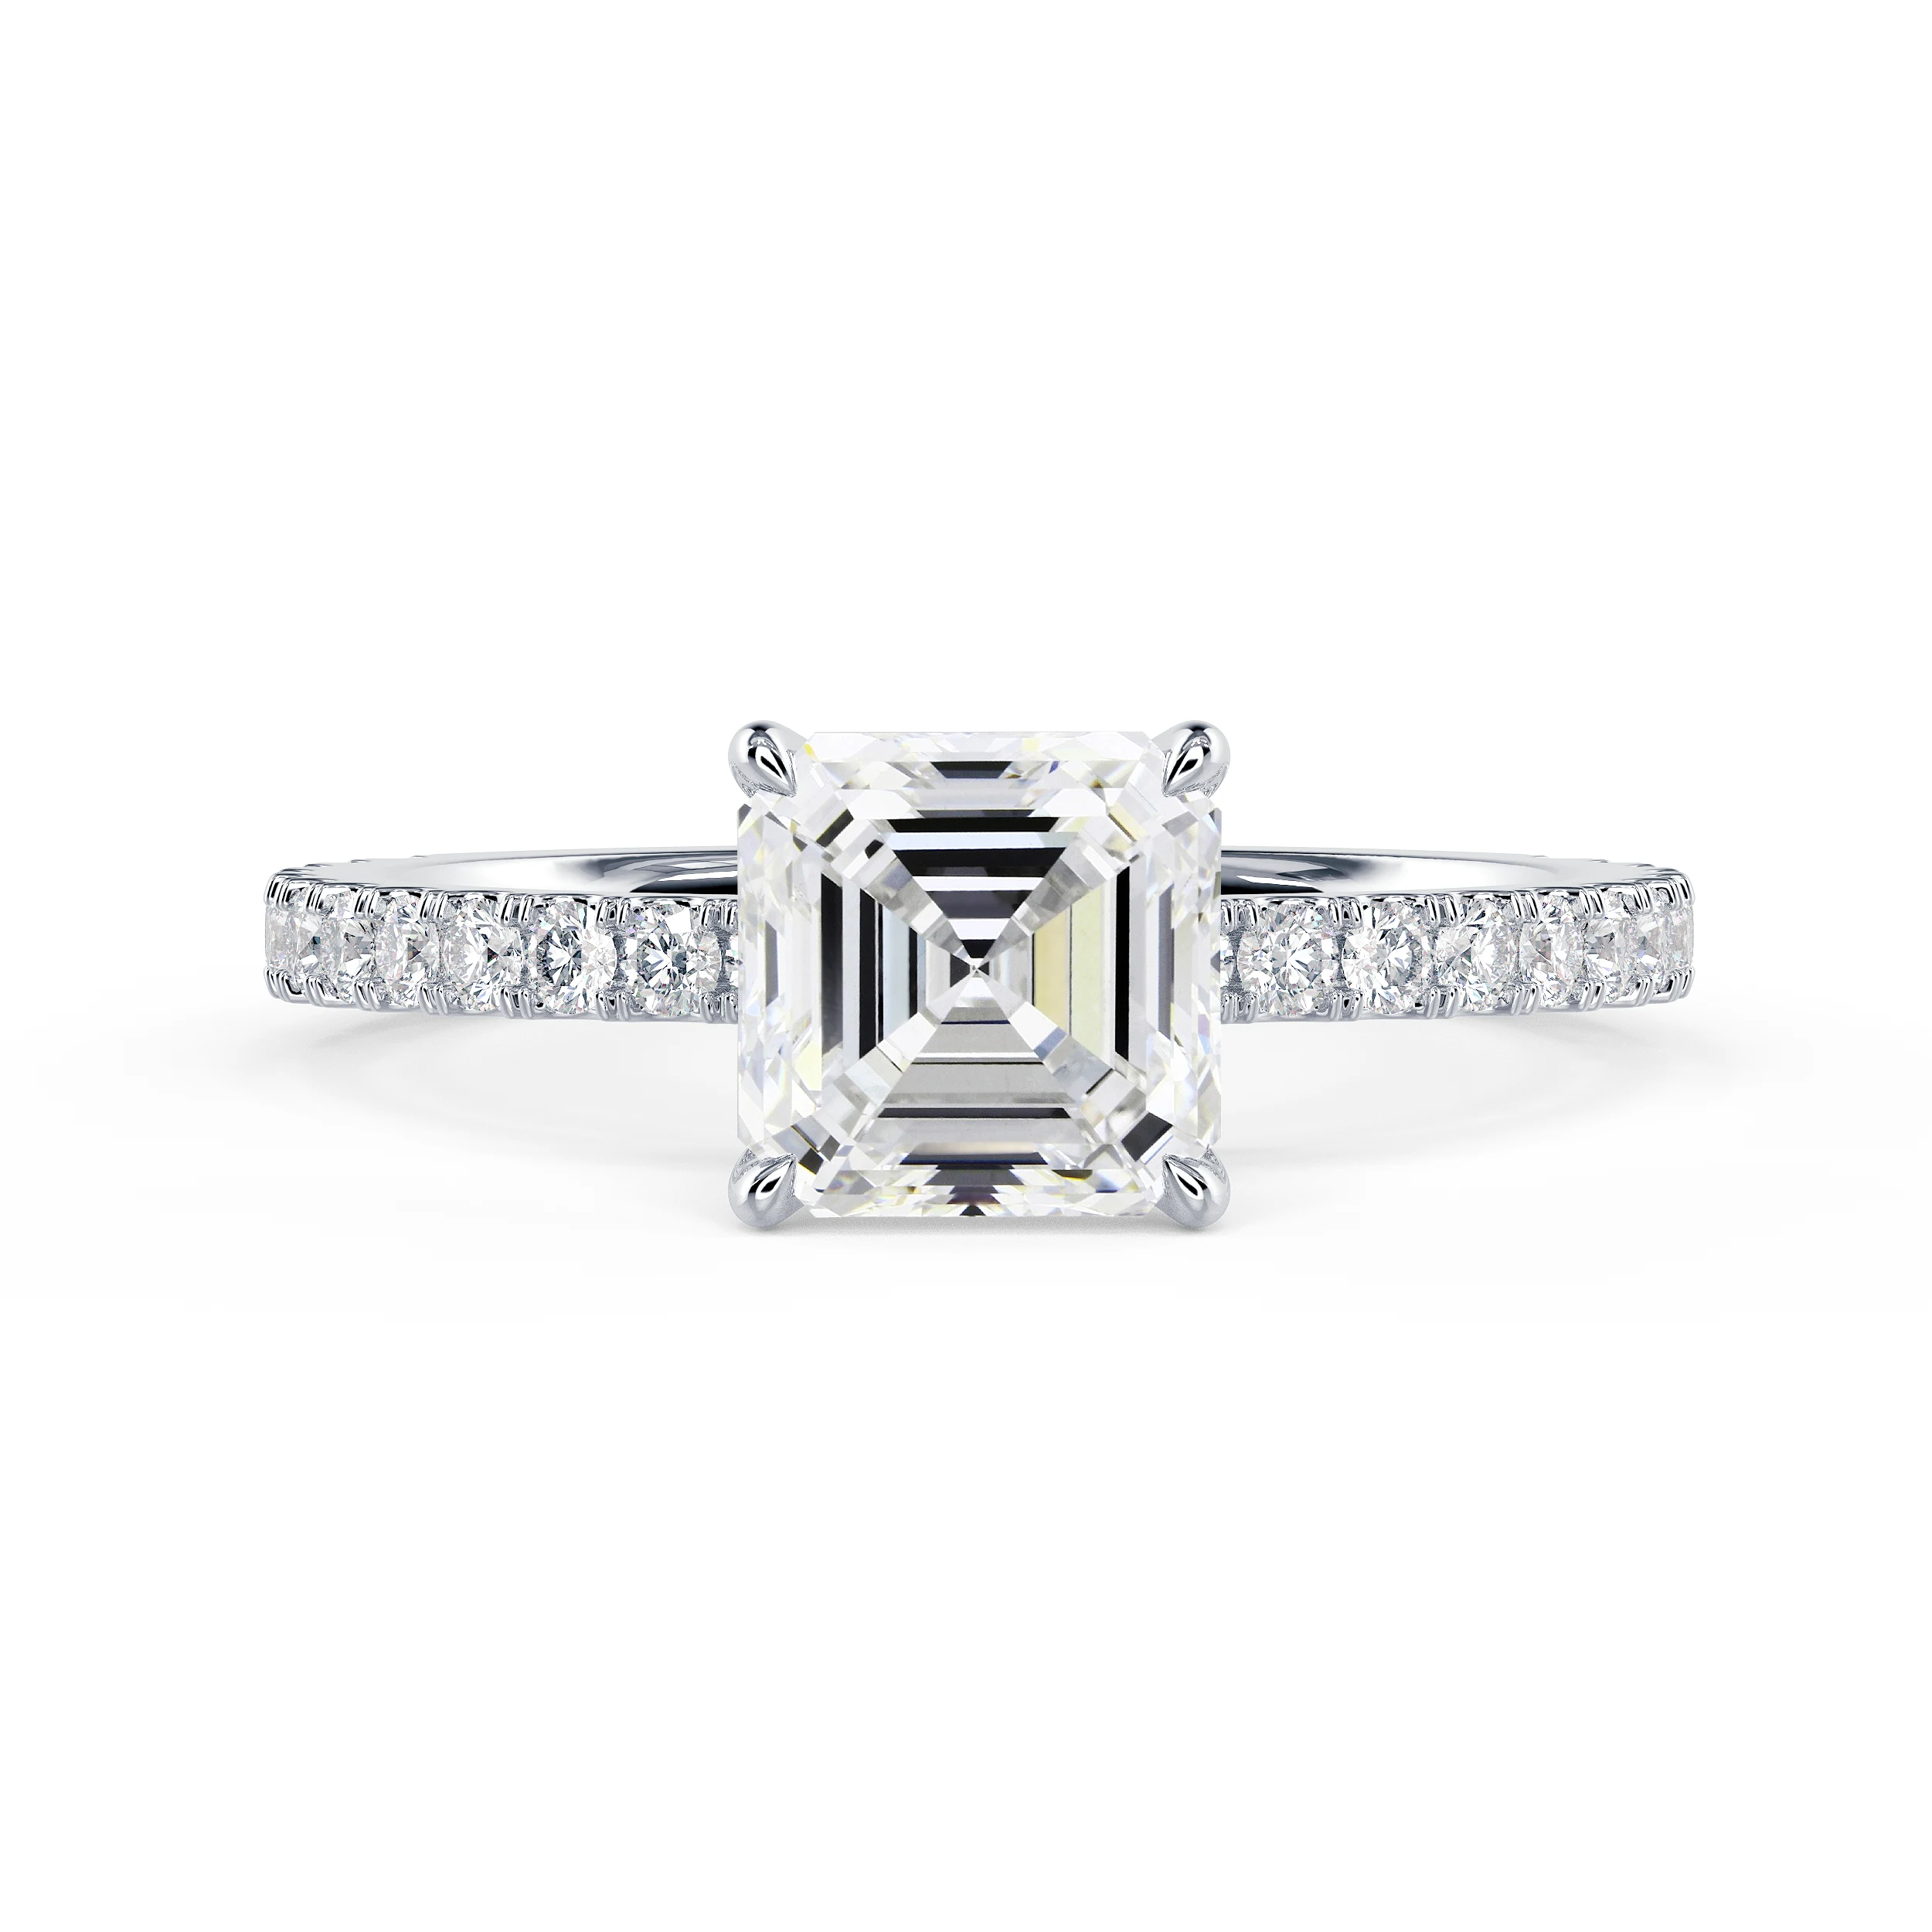 White Gold Asscher Classic Four Prong Pavé Diamond Engagement Ring featuring Man Made Diamonds (Main View)